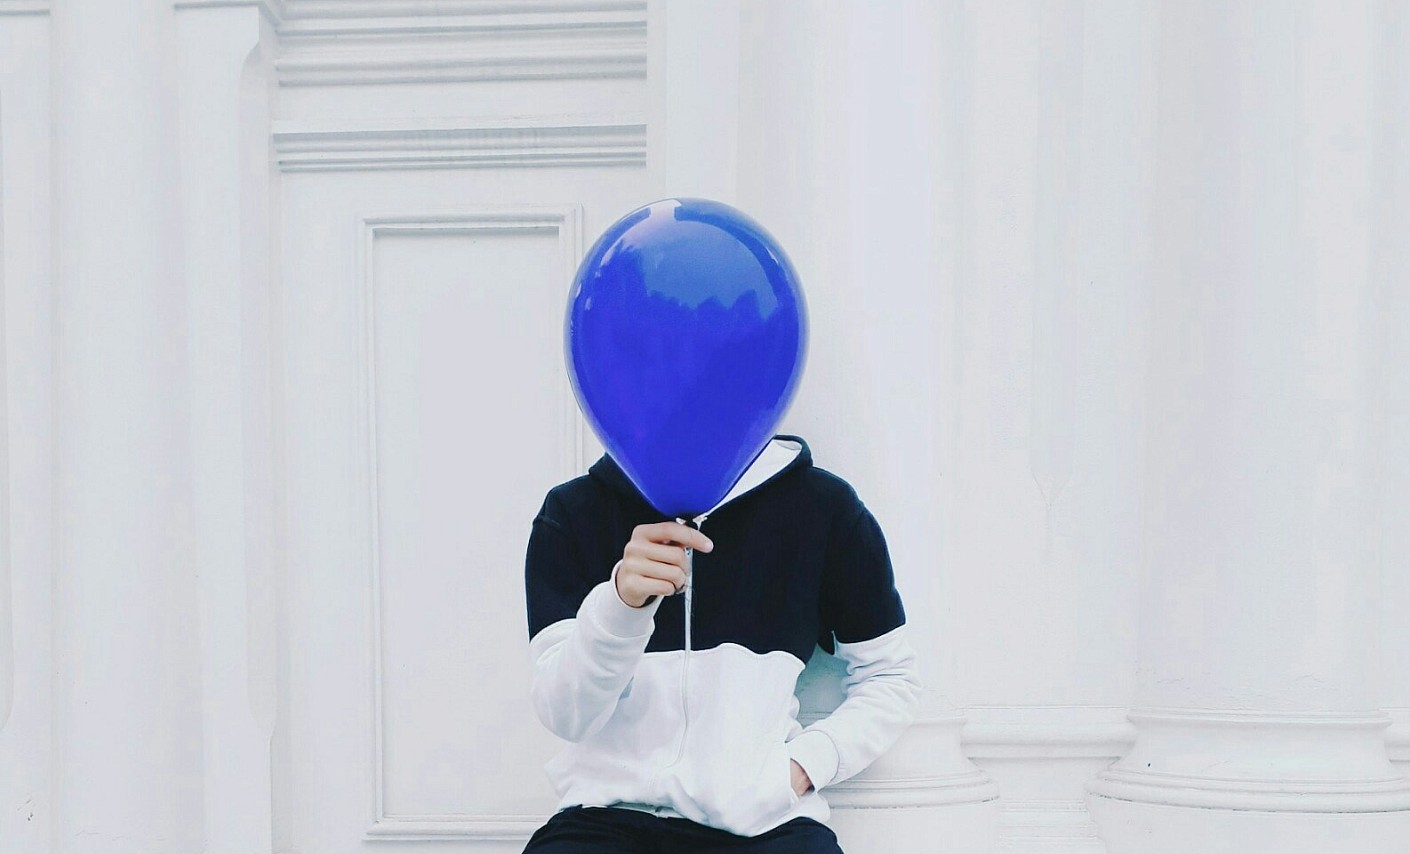 Mensch verdeckt Gesicht mit Ballon